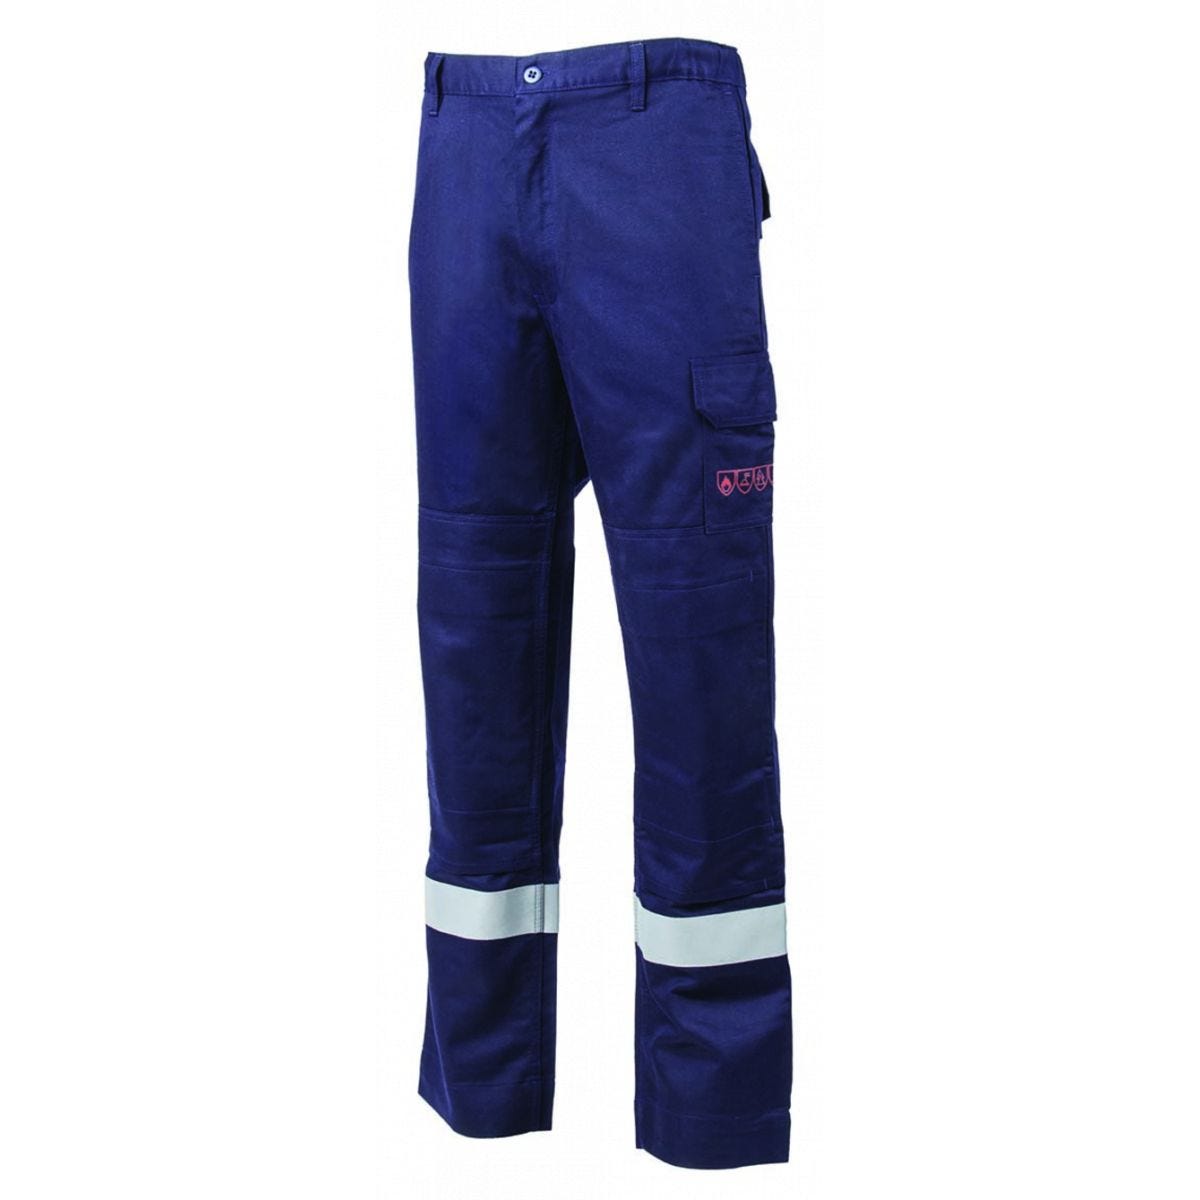 THOR Pantalon multirisques + bandes, 300g/m², Bleu - COVERGUARD - Taille S 0